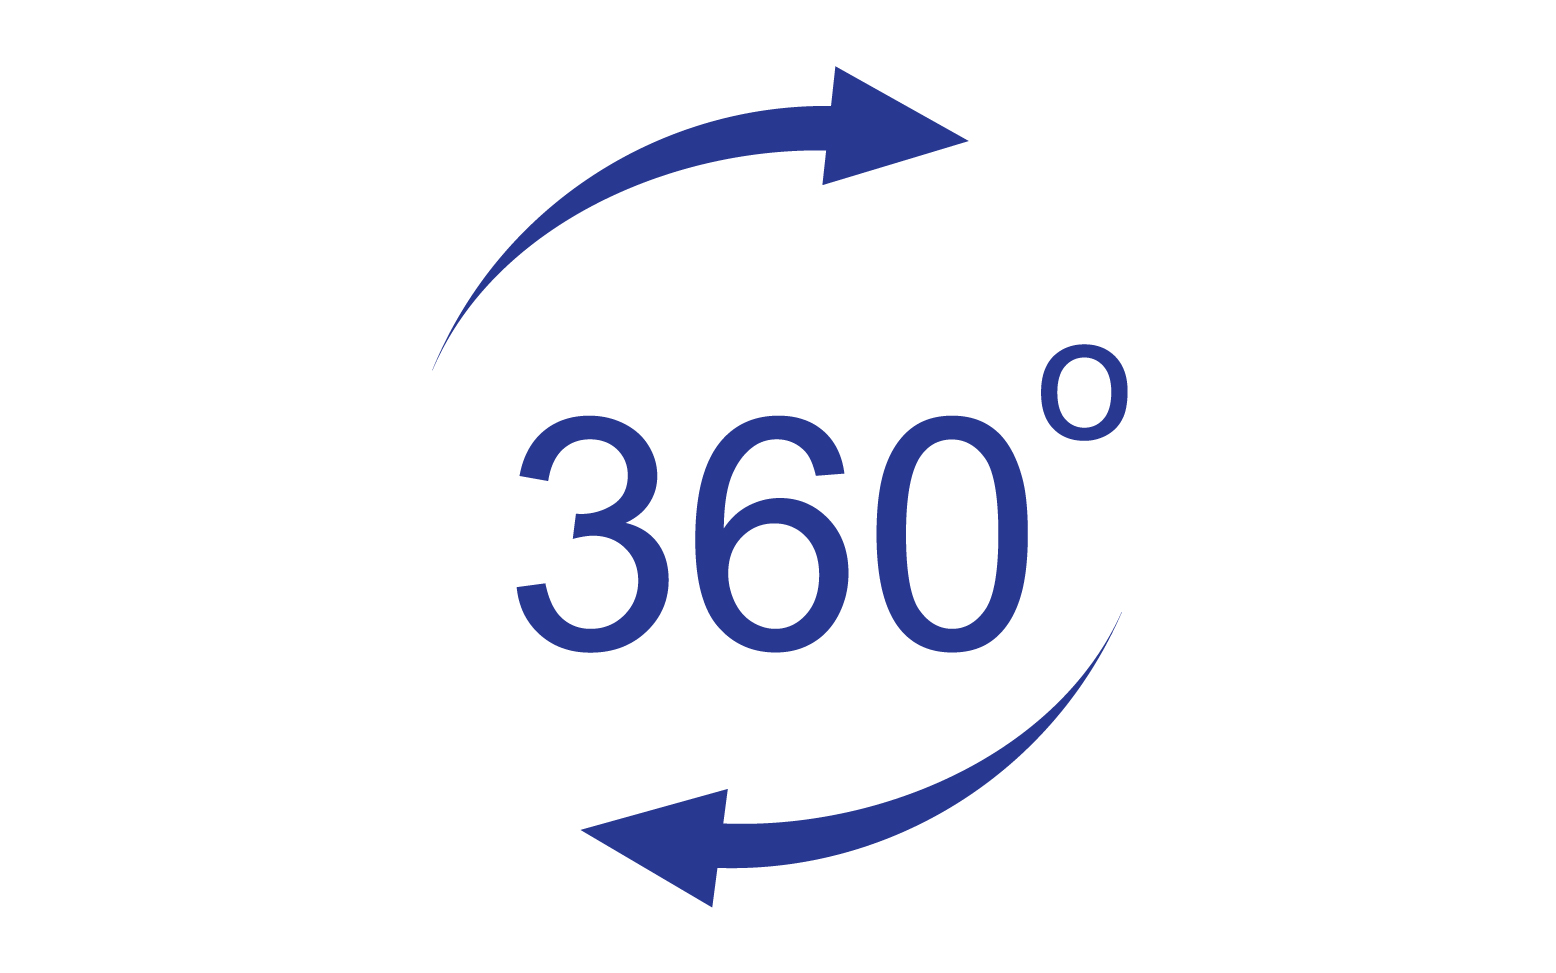 360 degree angle rotation icon symbol logo version v38